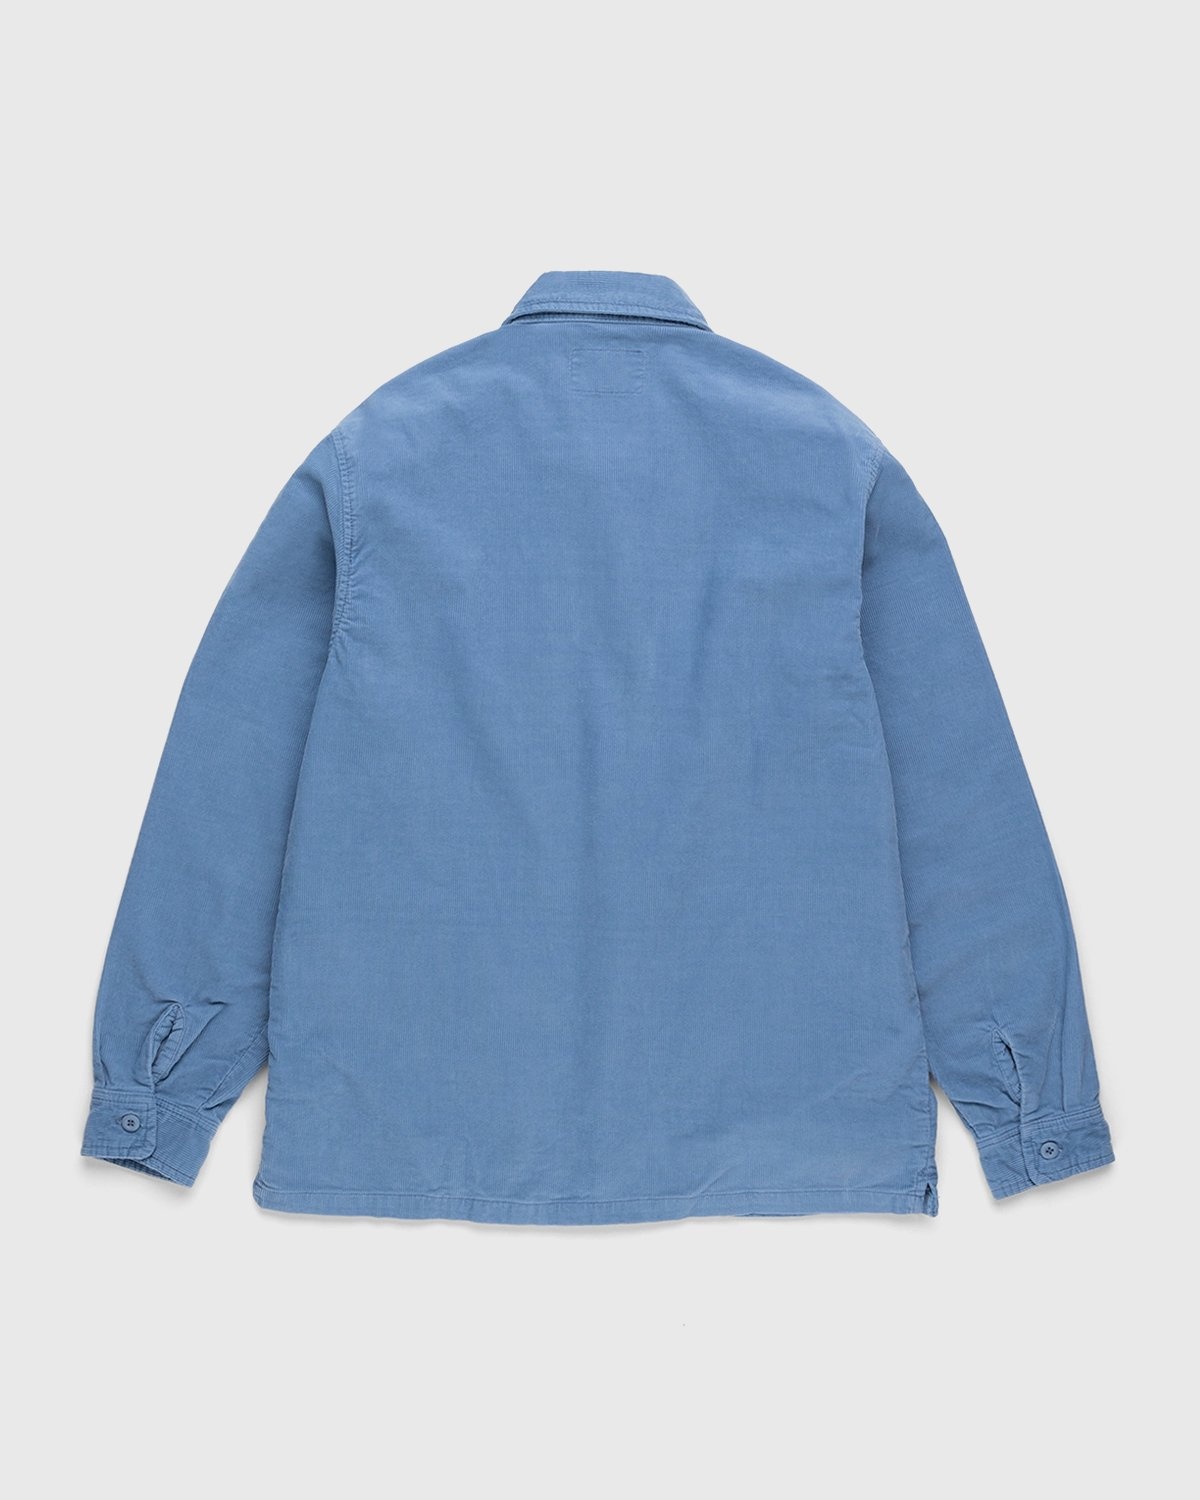 Carhartt WIP – Dixon Shirt Jacket Icy Water Rinsed - Overshirt - Blue - Image 2